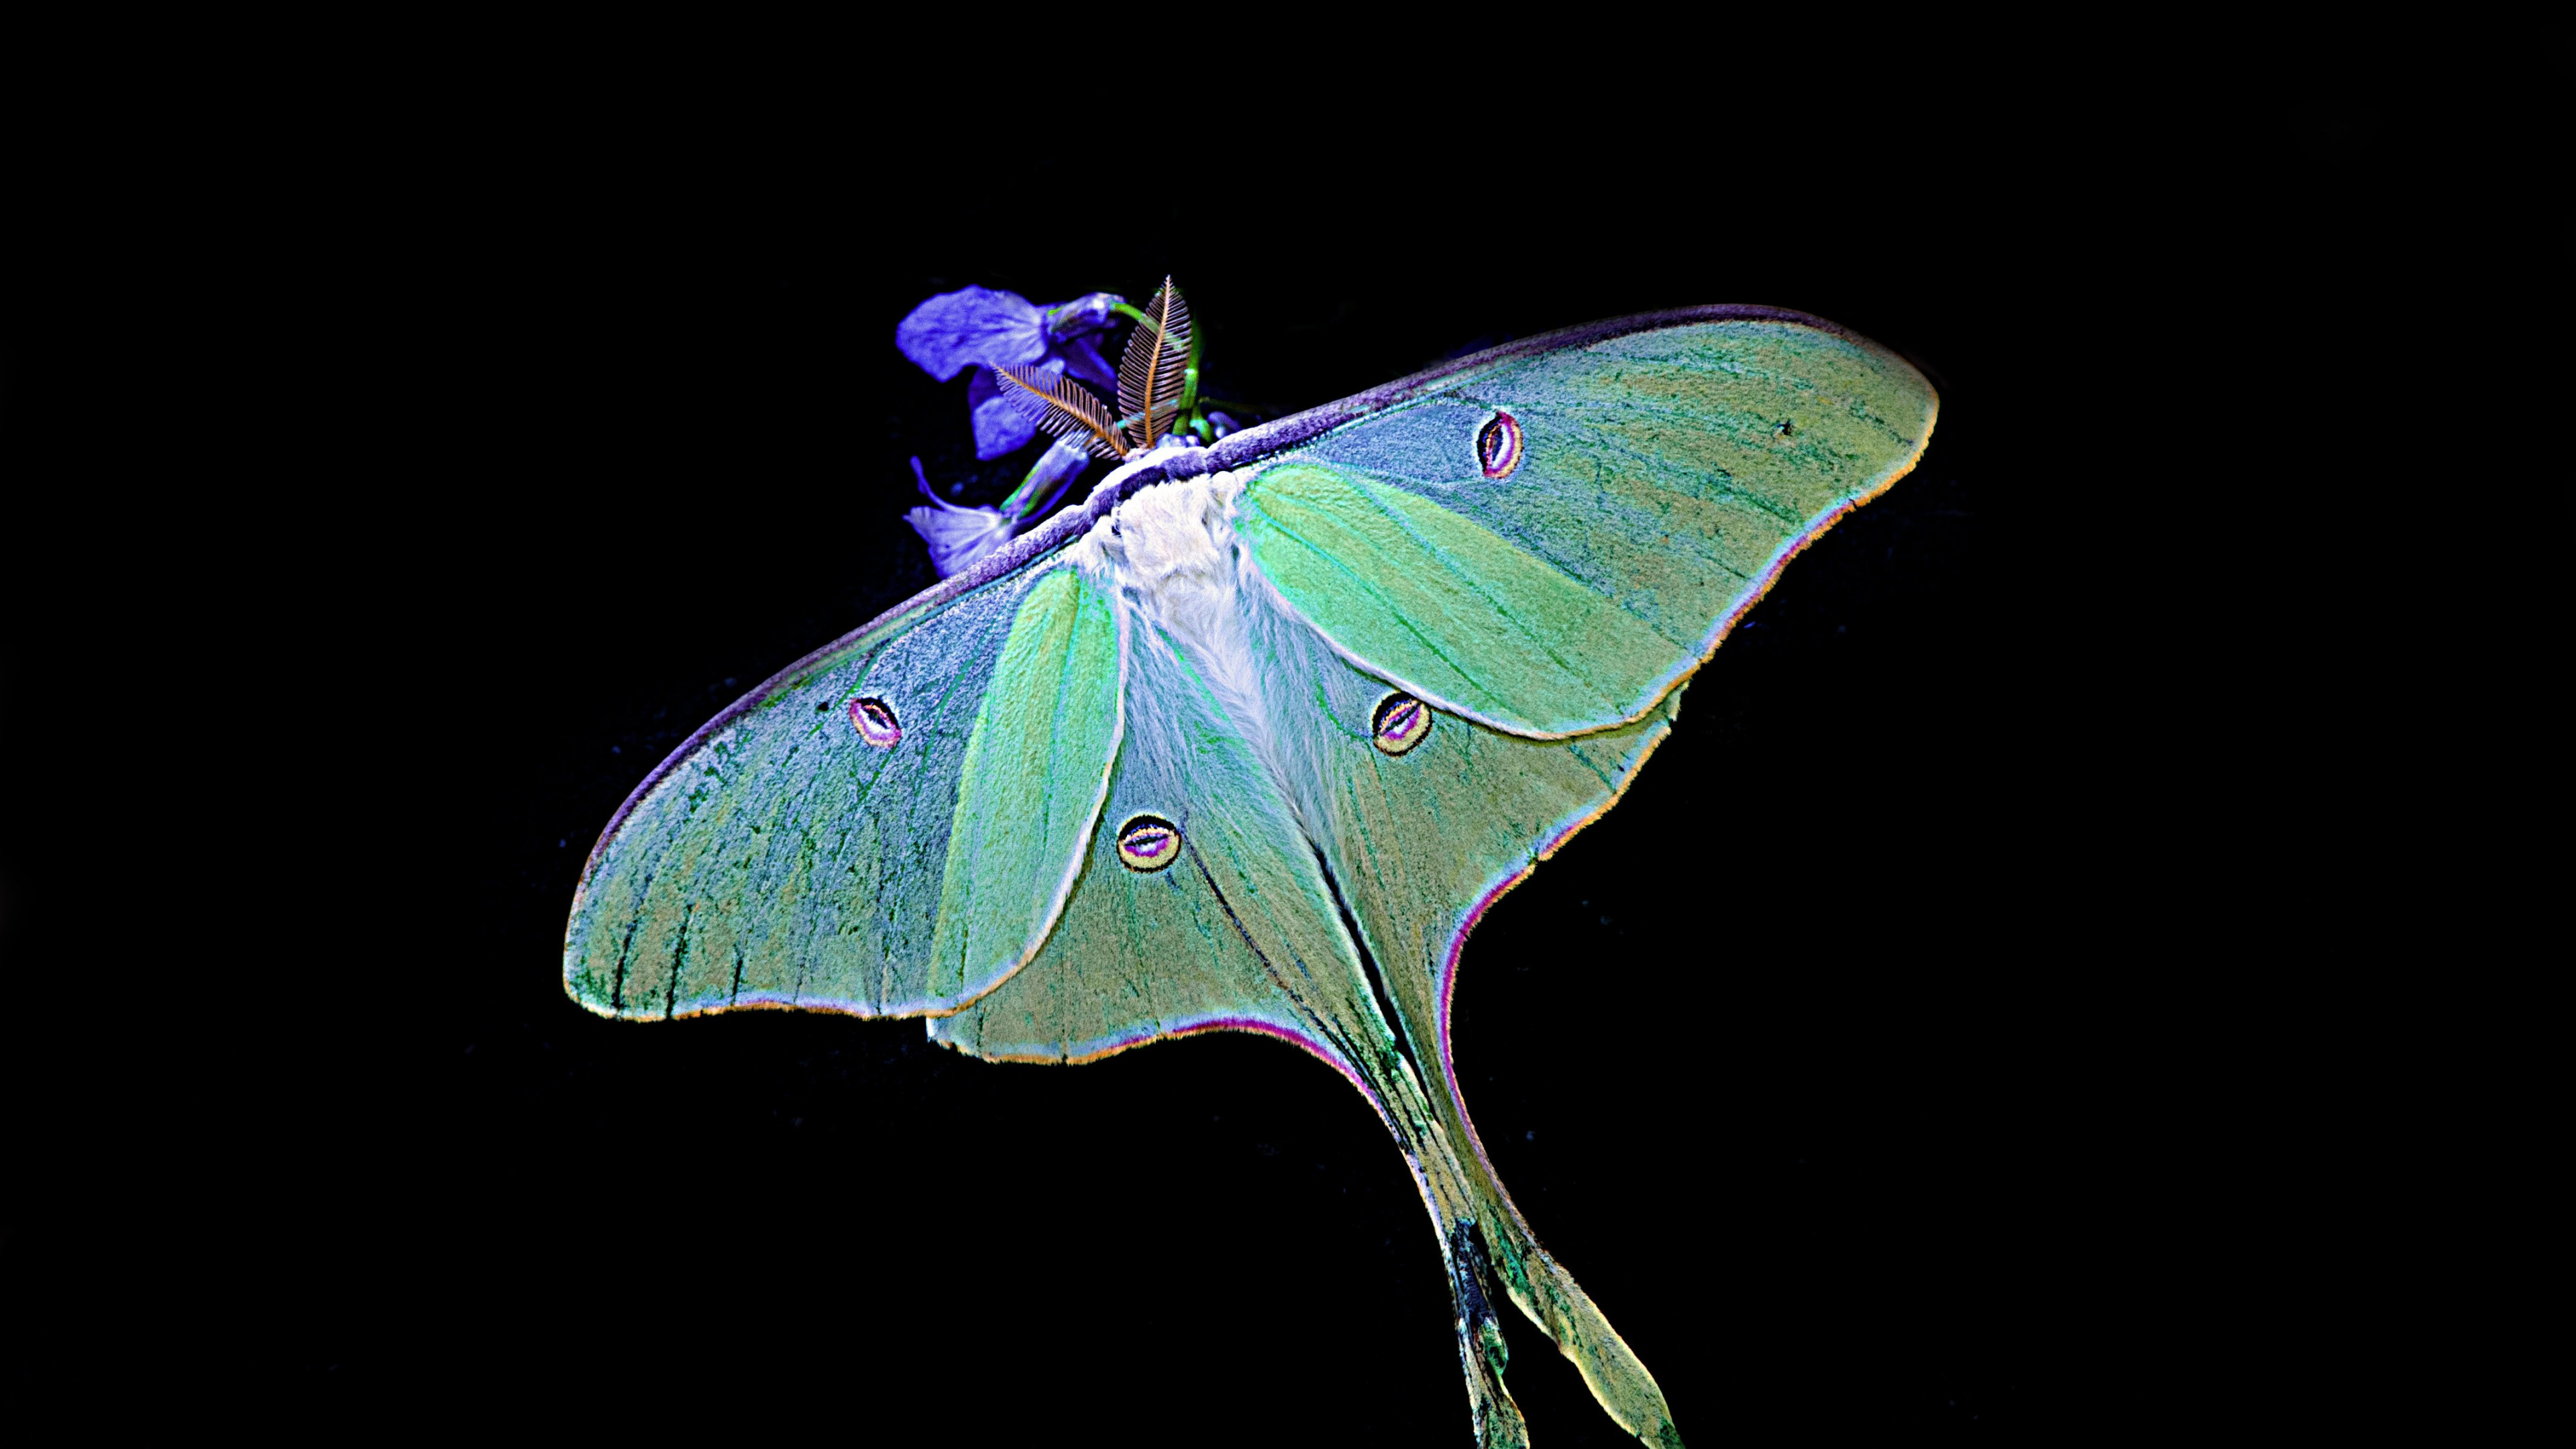 Graceful luna moth, Enchanting wallpaper, Widescreen beauty, Desktop-worthy, 3840x2160 4K Desktop